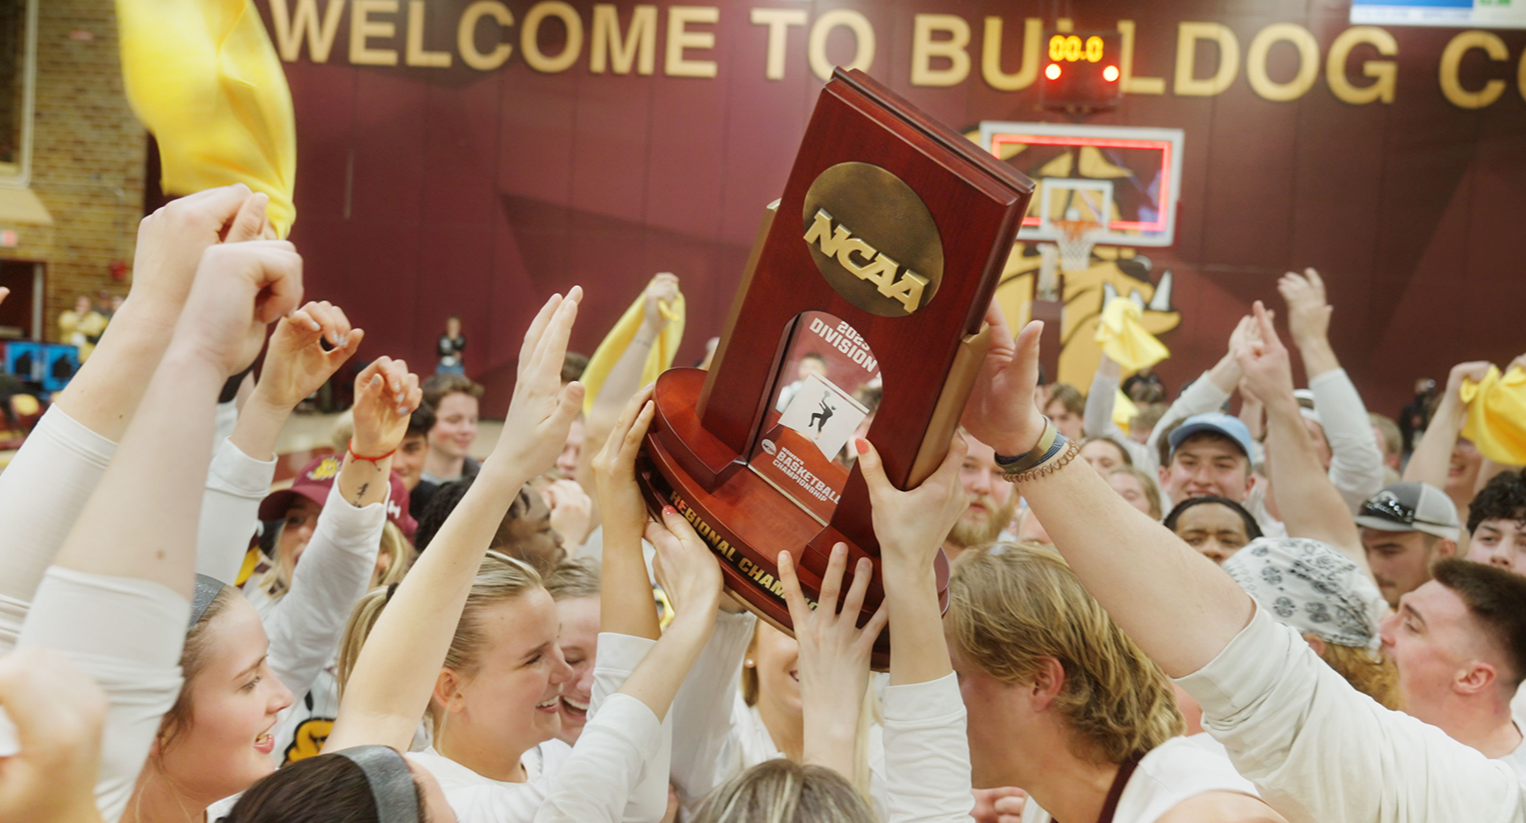 A crowd of hands reach for a NCAA trophy after a recent women's basketball win